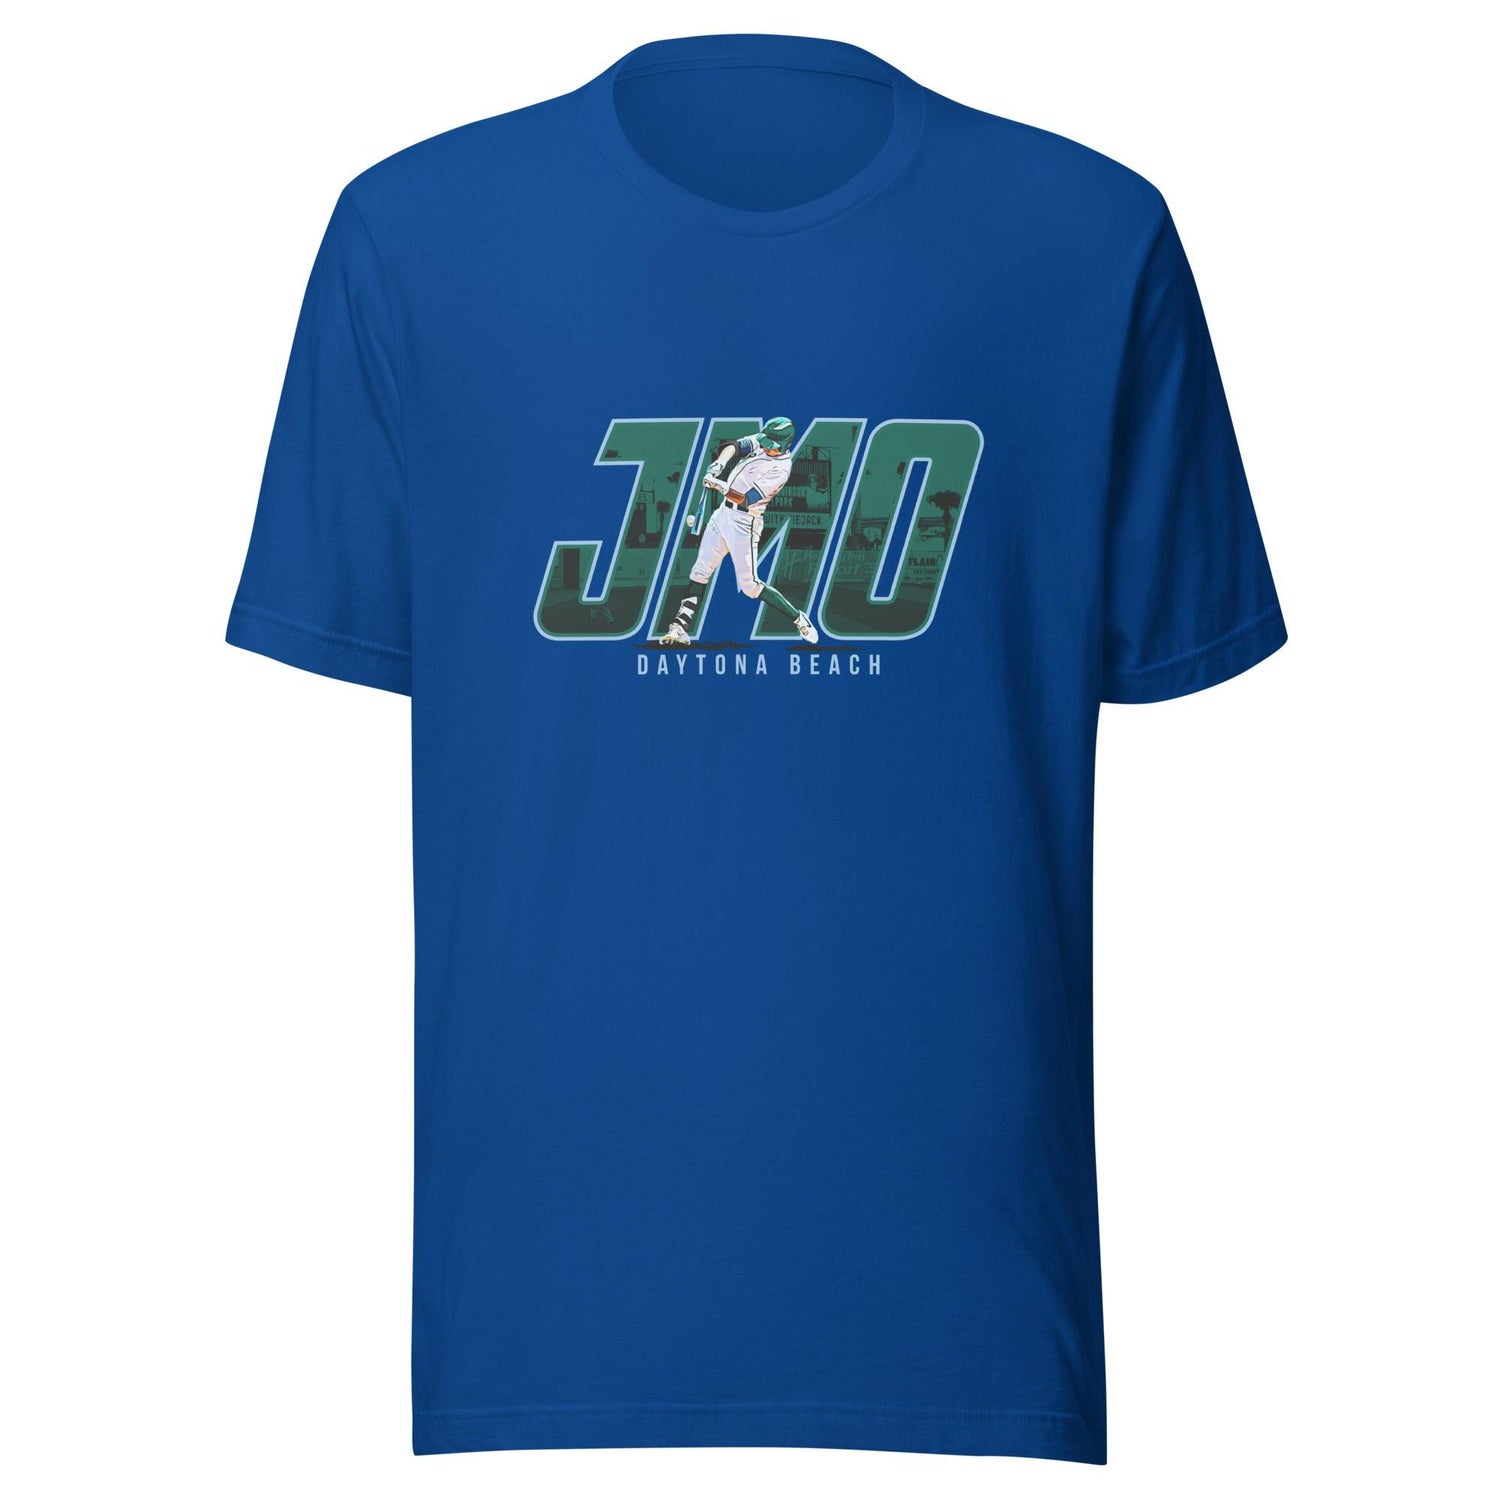 Jack Moss "Gameday" t-shirt - Fan Arch